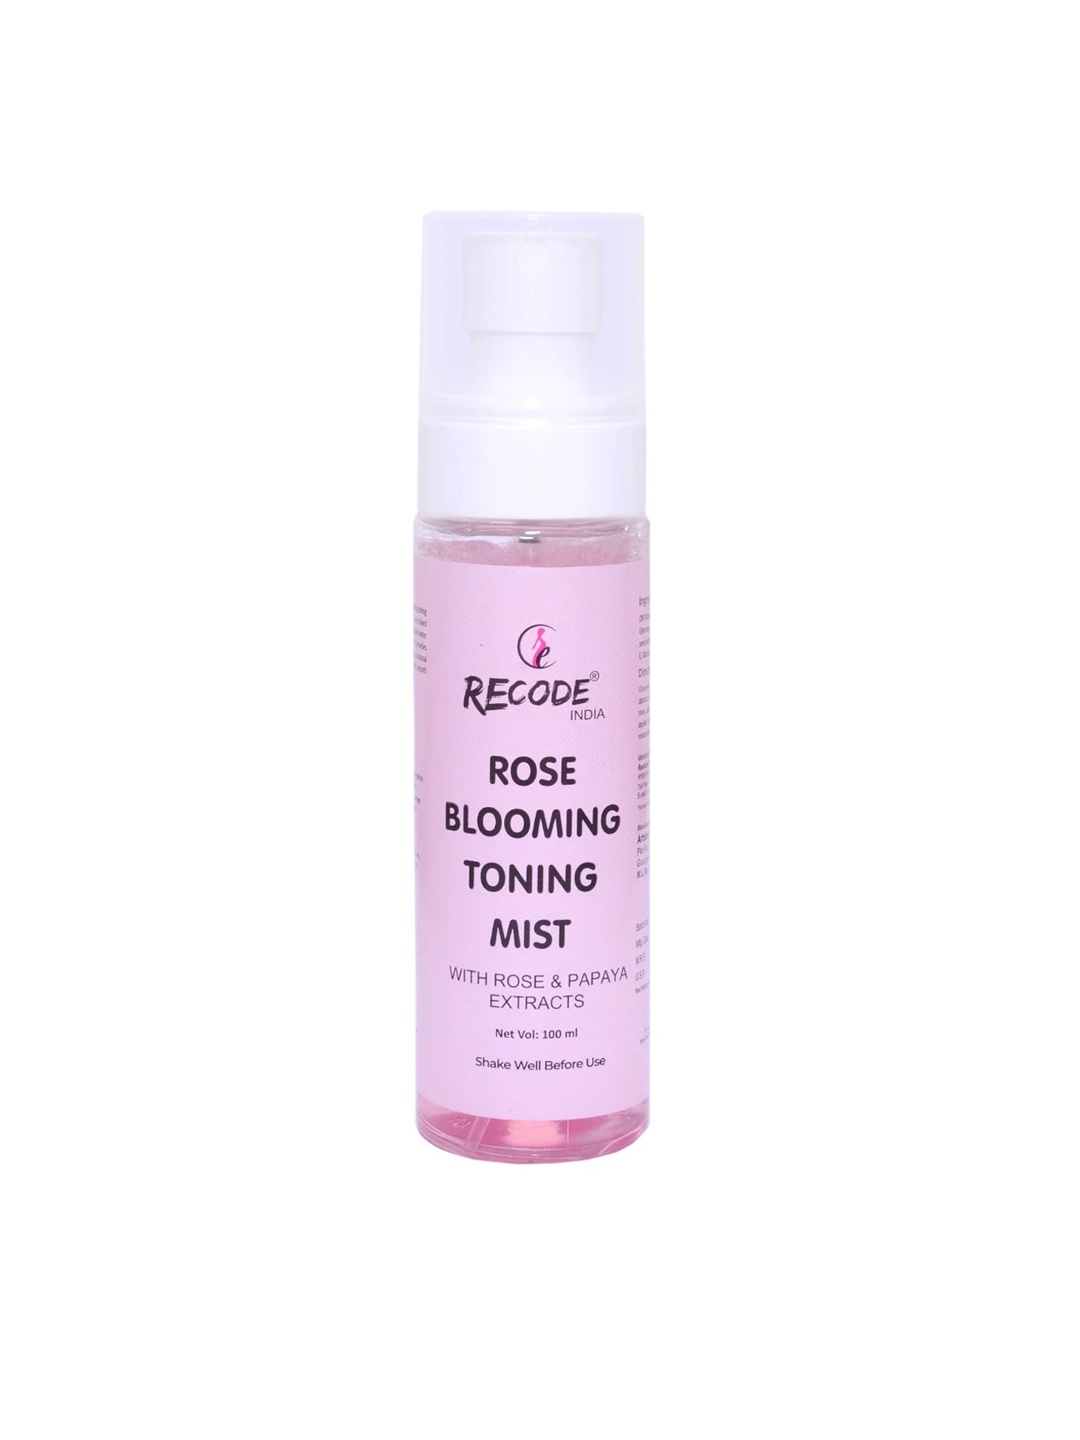 

Recode Rose Blooming Toning Face Mist Toner with Rose & Papaya Extract - 100 ml, Pink